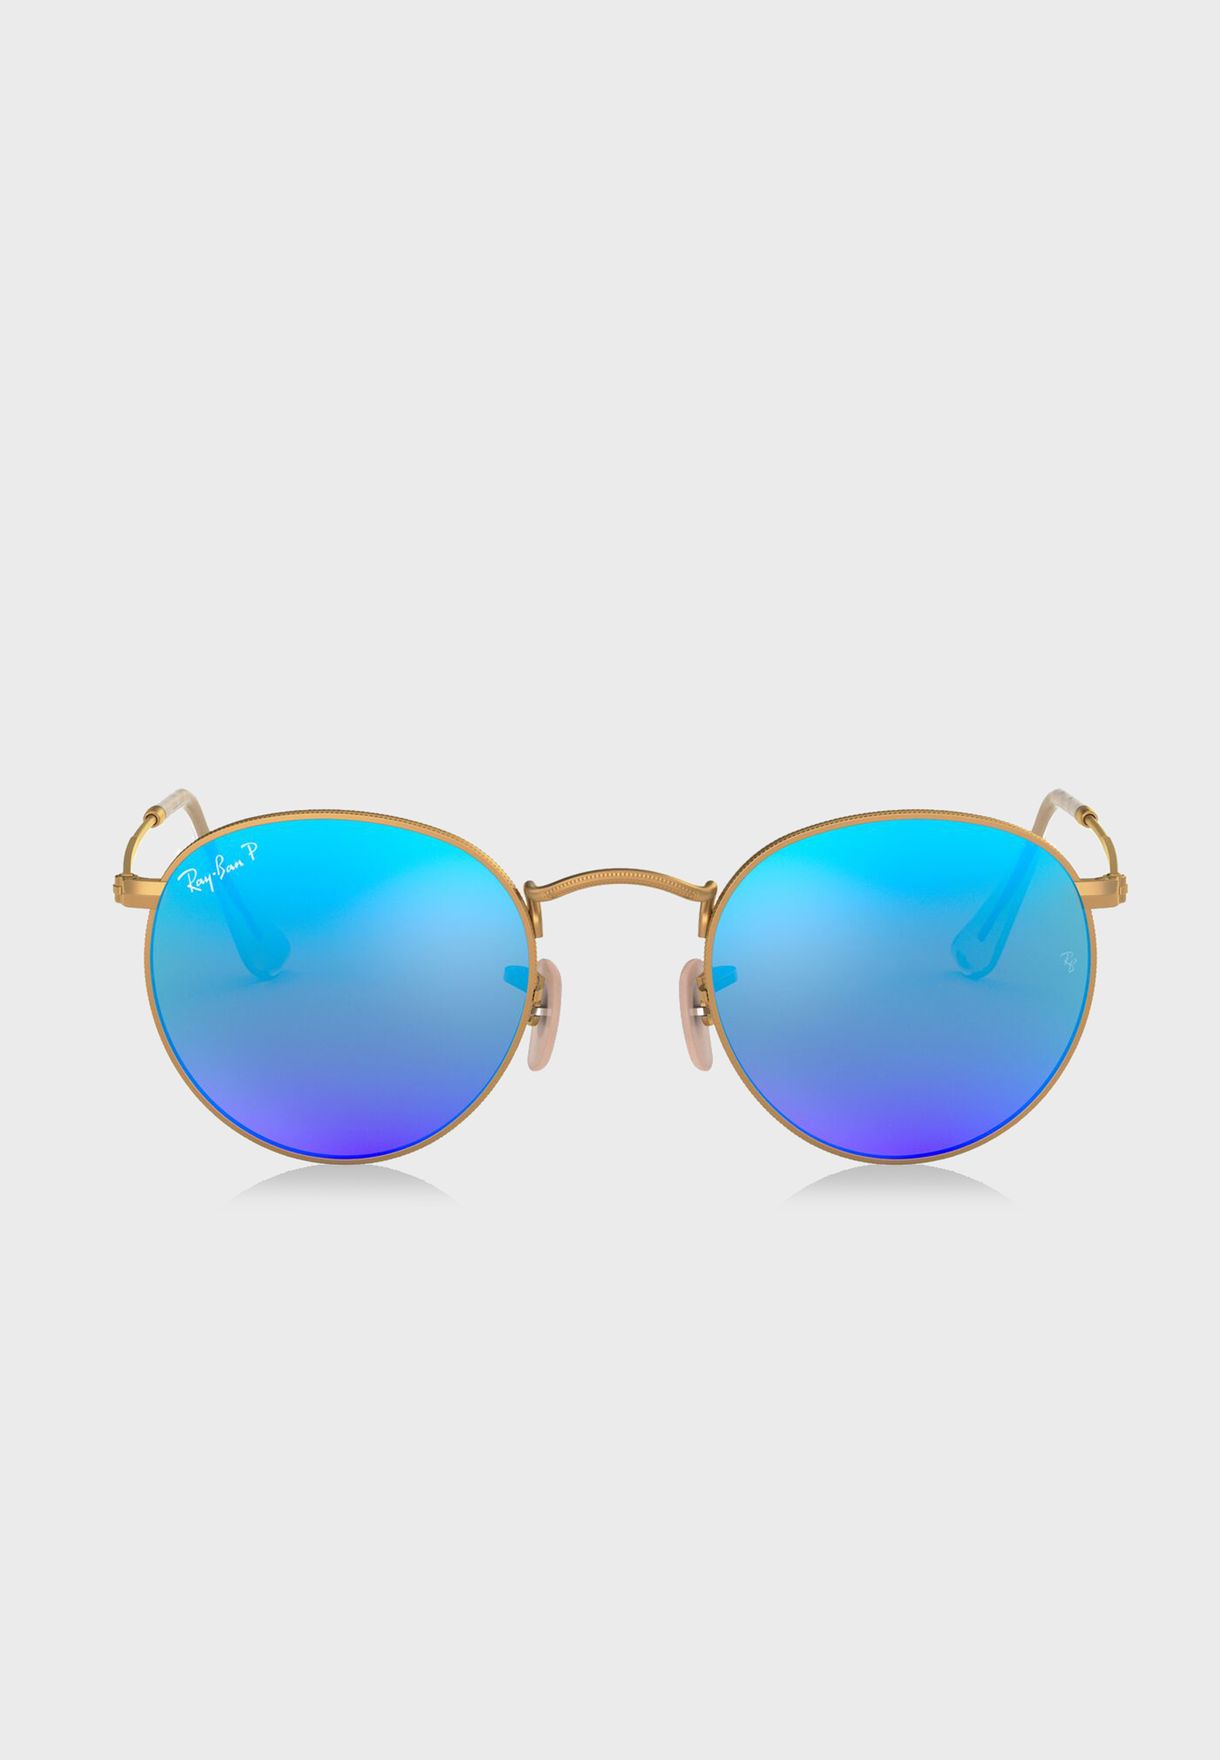 price of rayban sunglasses in dubai